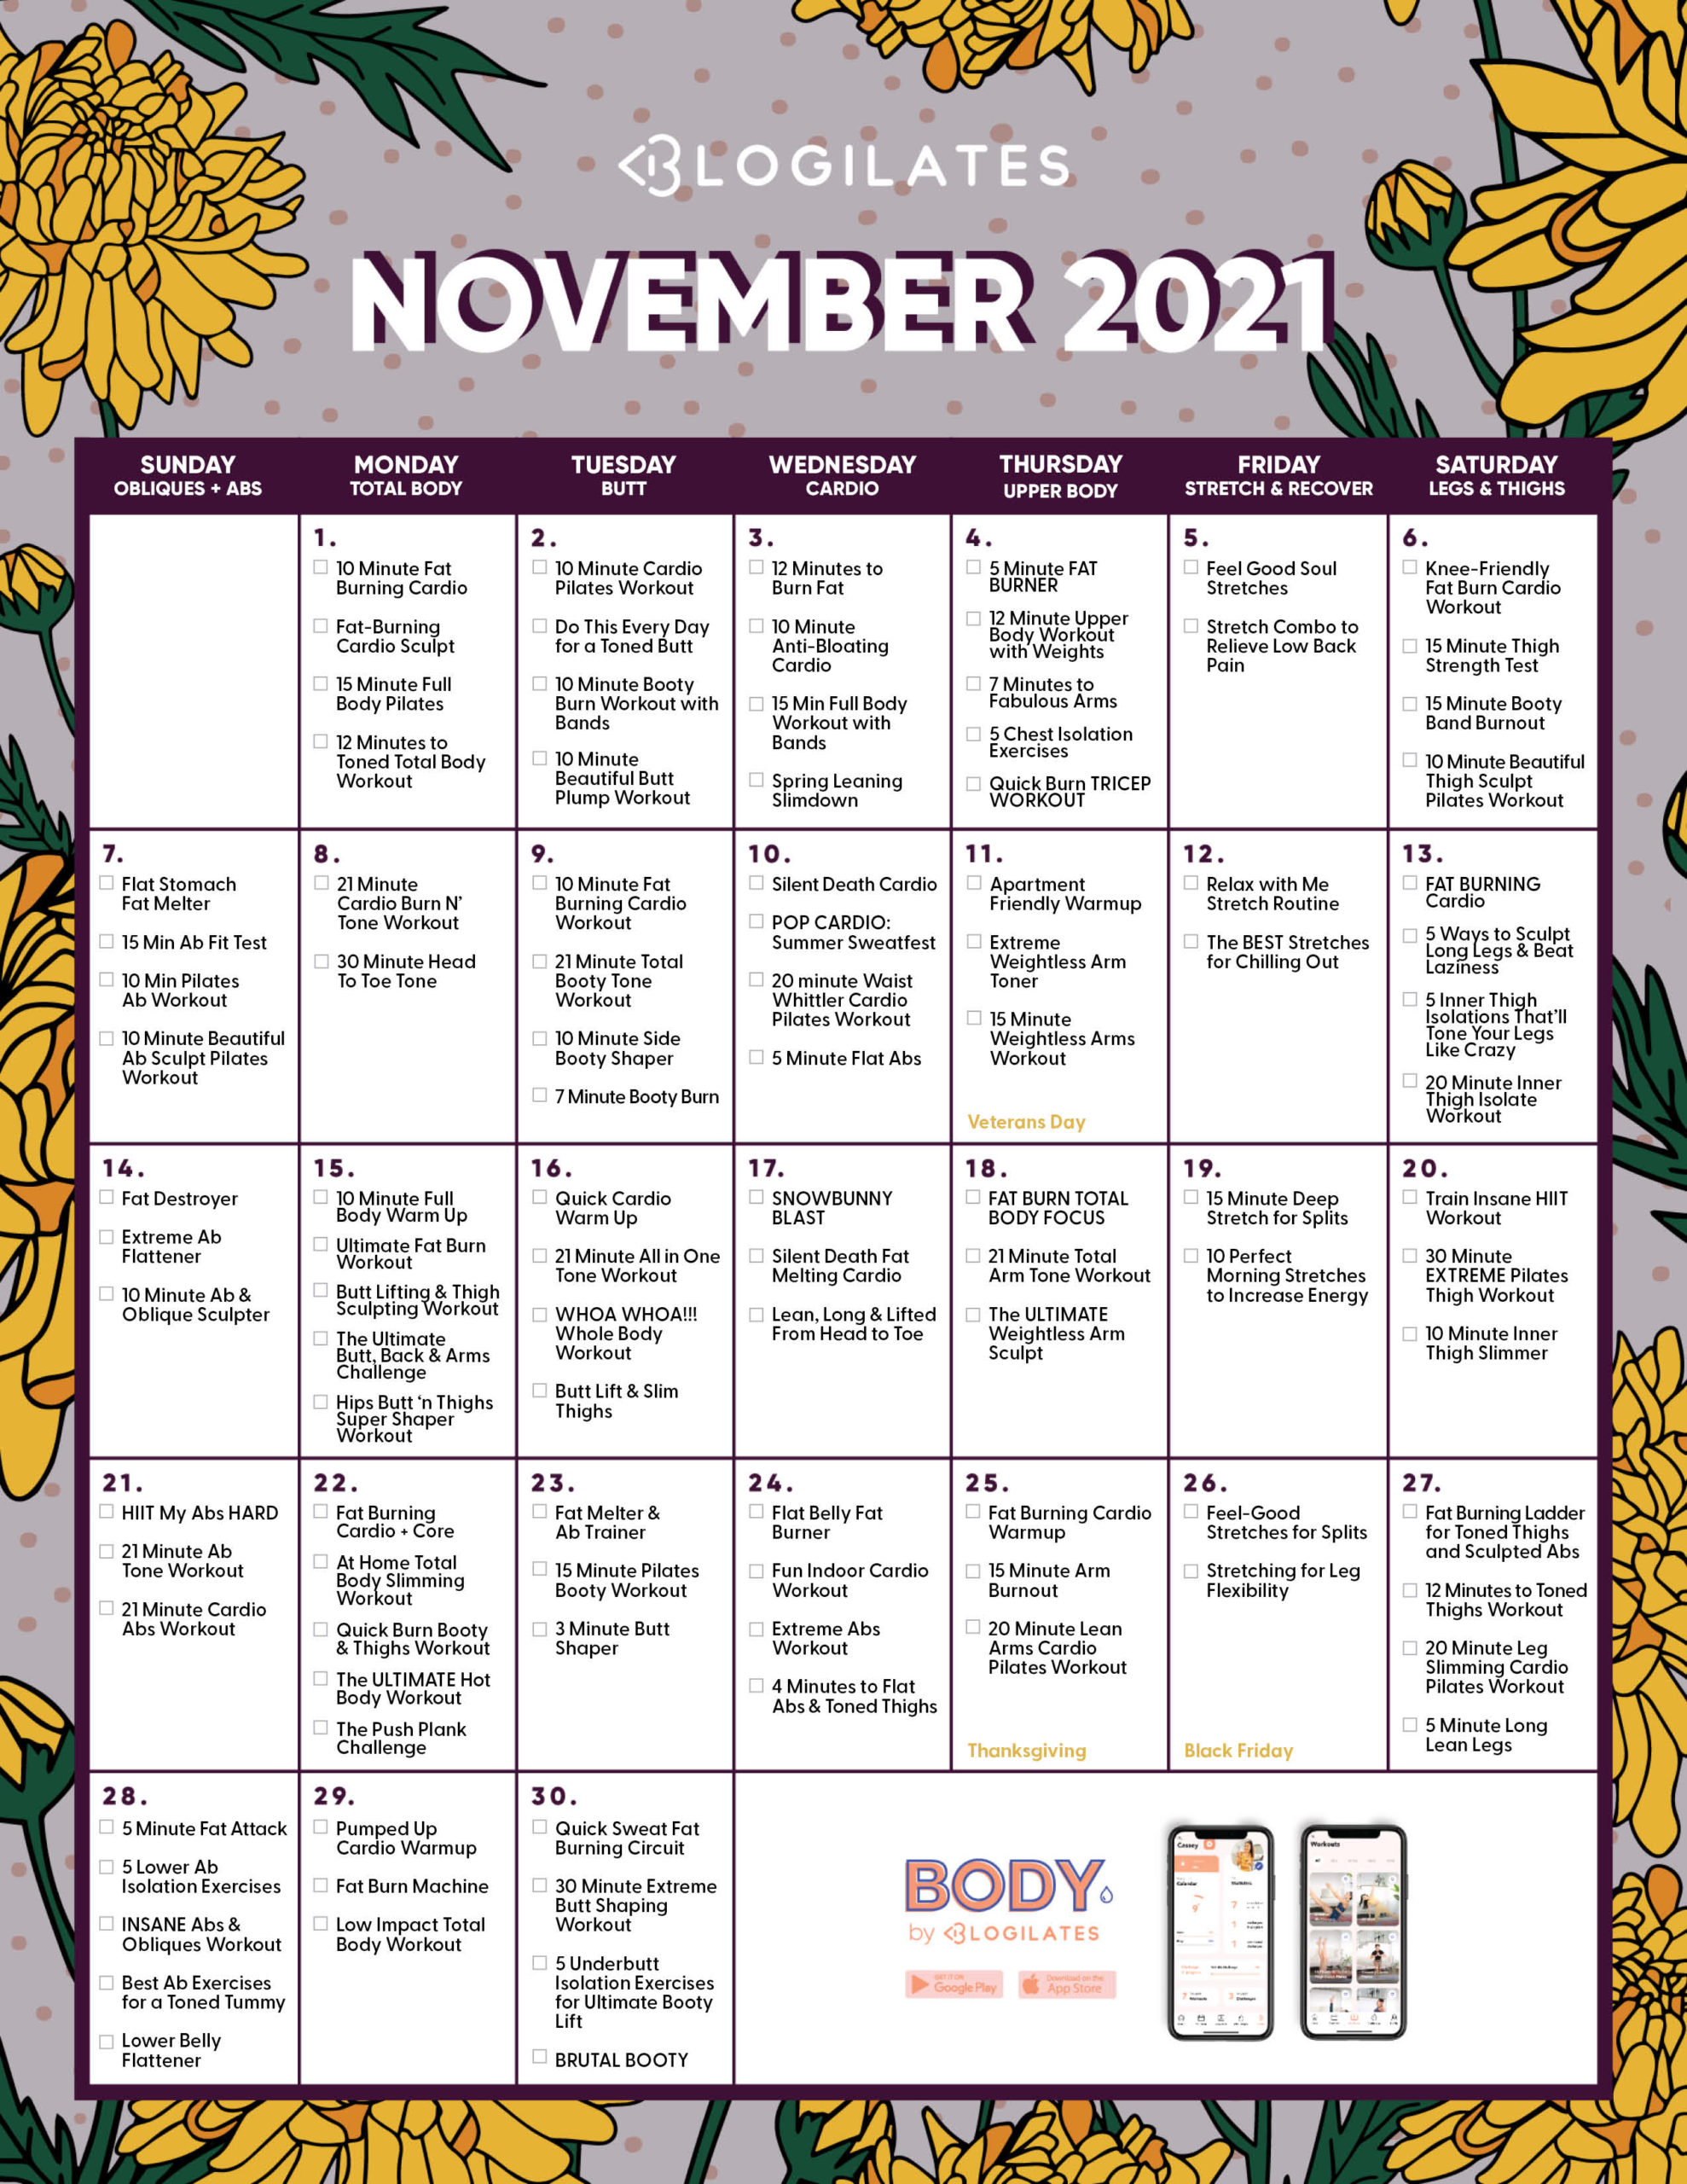 The Blogilates November 2021 Workout Calendar!